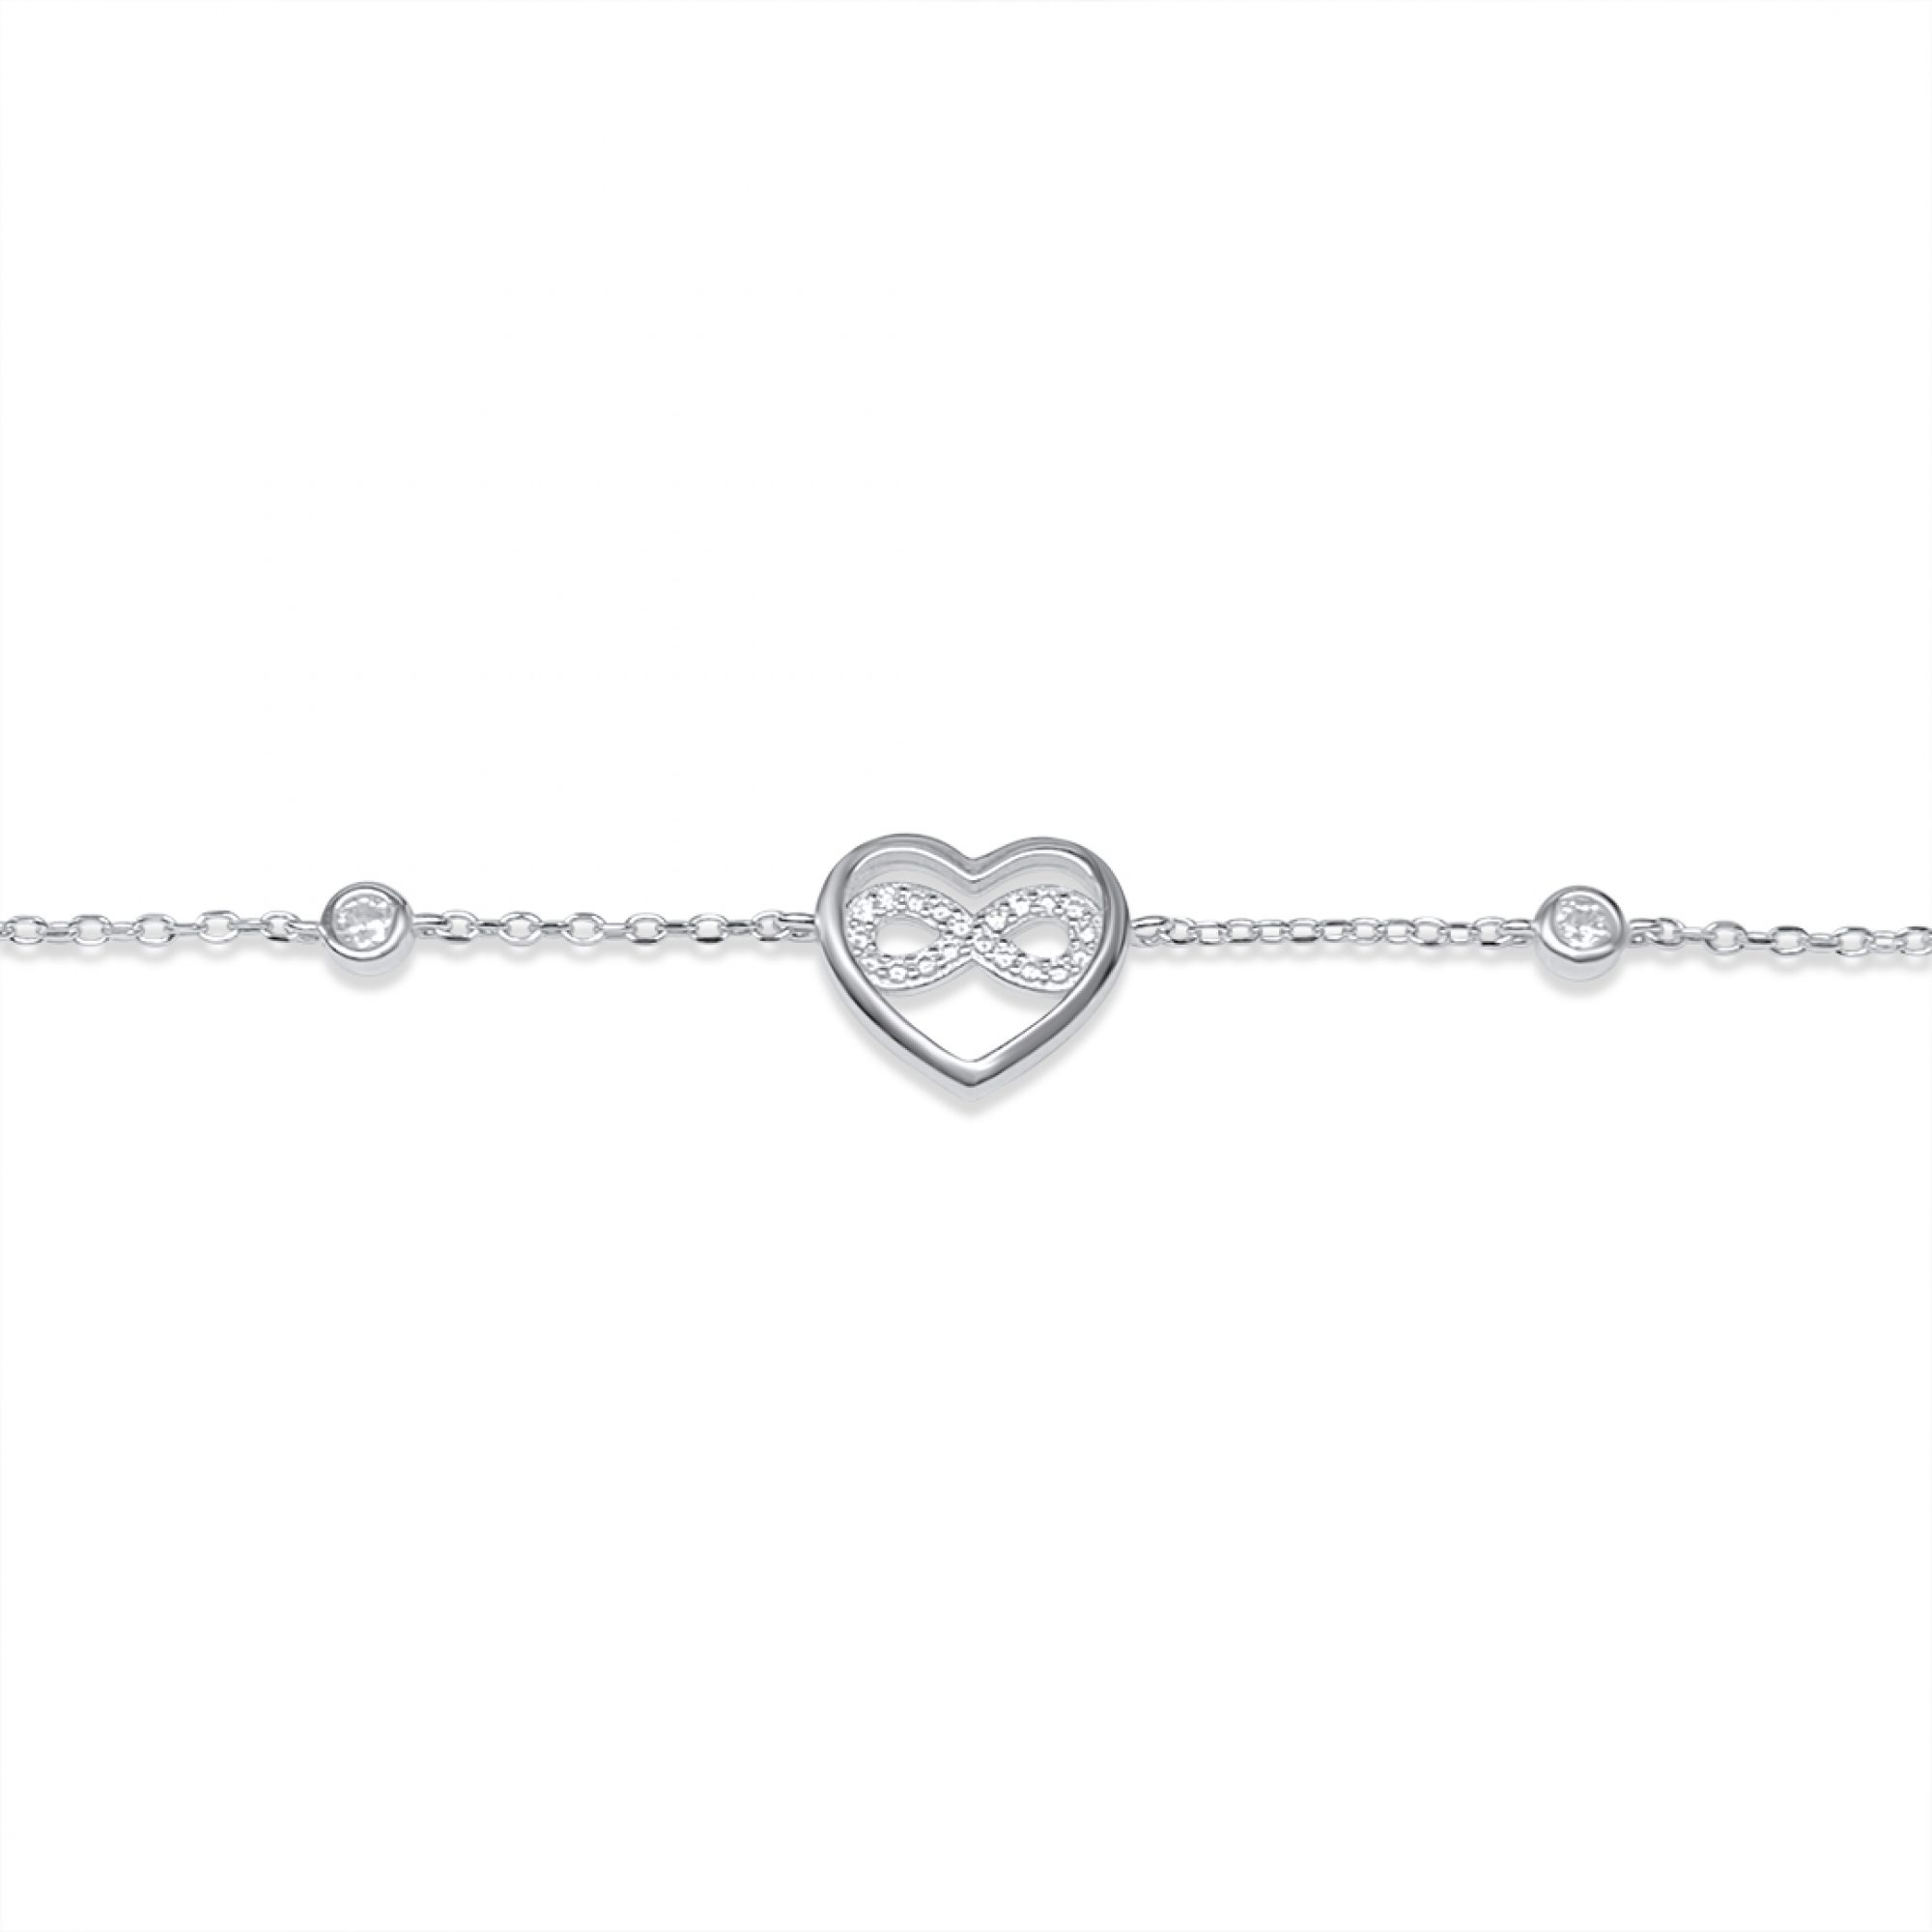 Heart-infinity bracelet with zircon stones